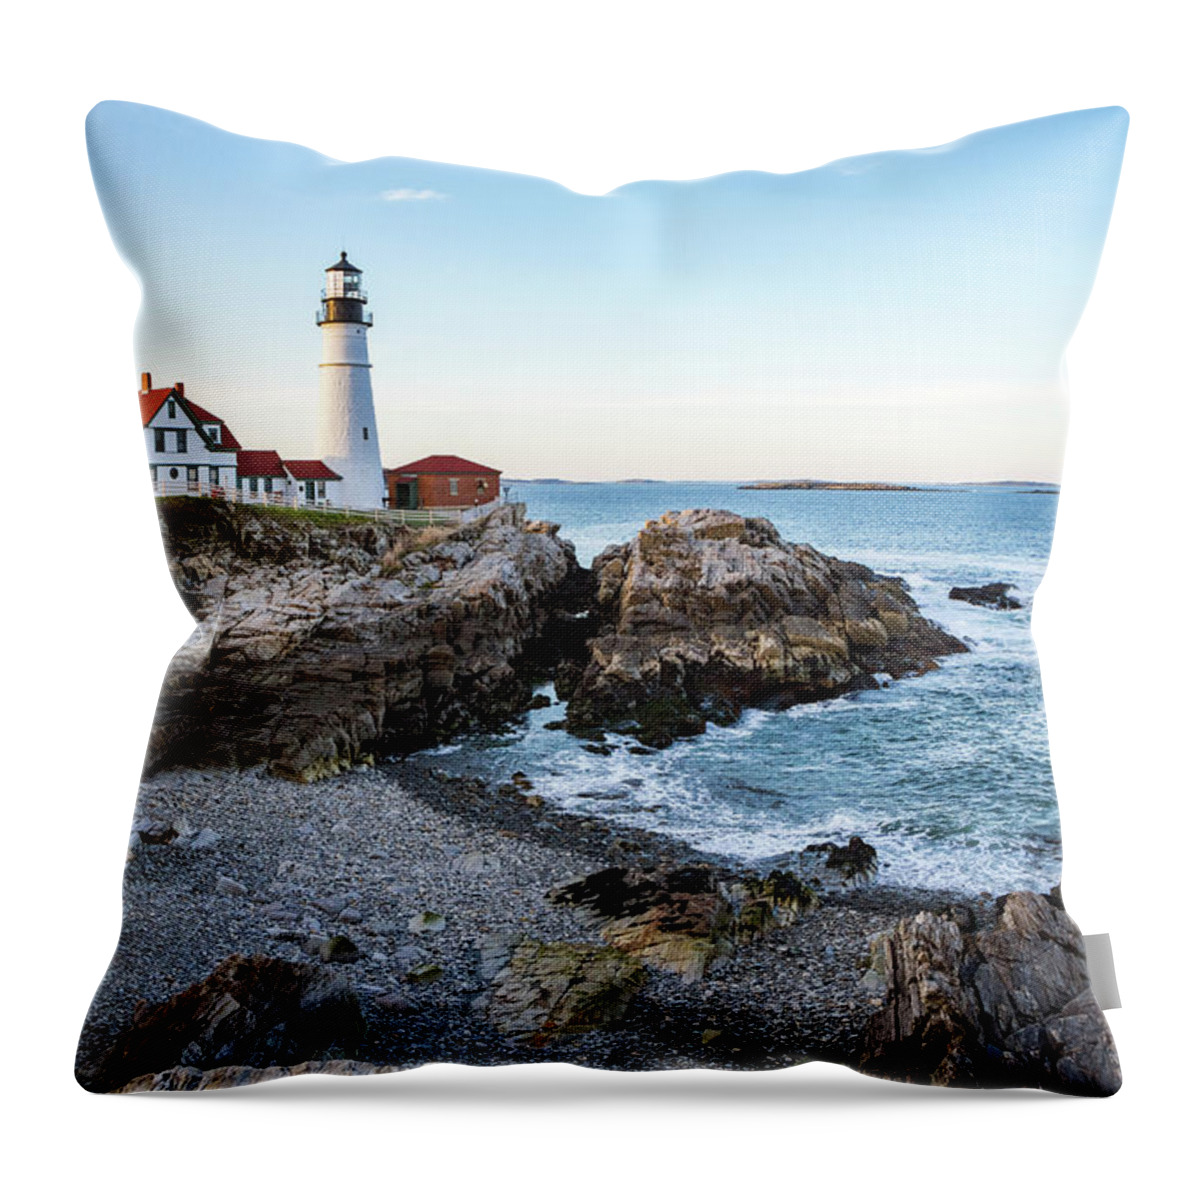 Cape Elizabeth Throw Pillow featuring the photograph Portland Headlight and Ram Island Light by Robert Clifford